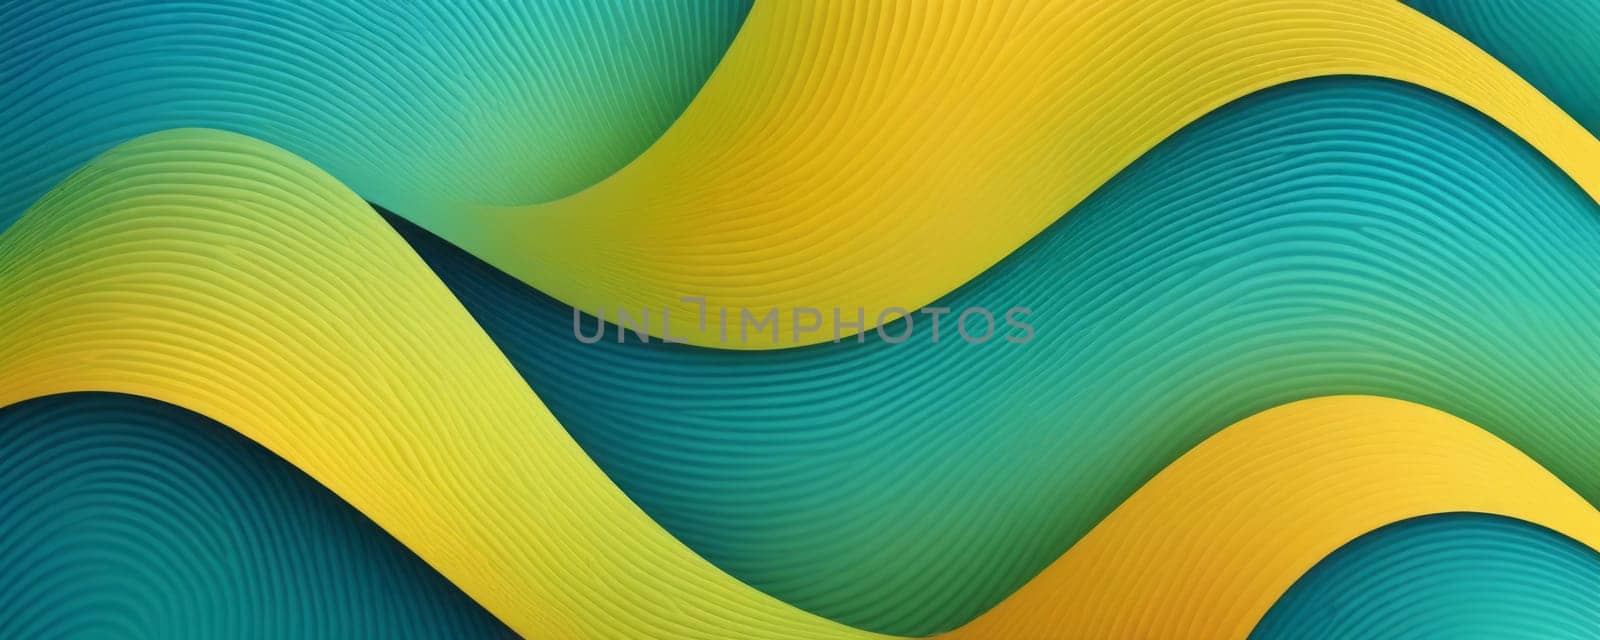 Vortex Shapes in Yellow Aquamarine by nkotlyar